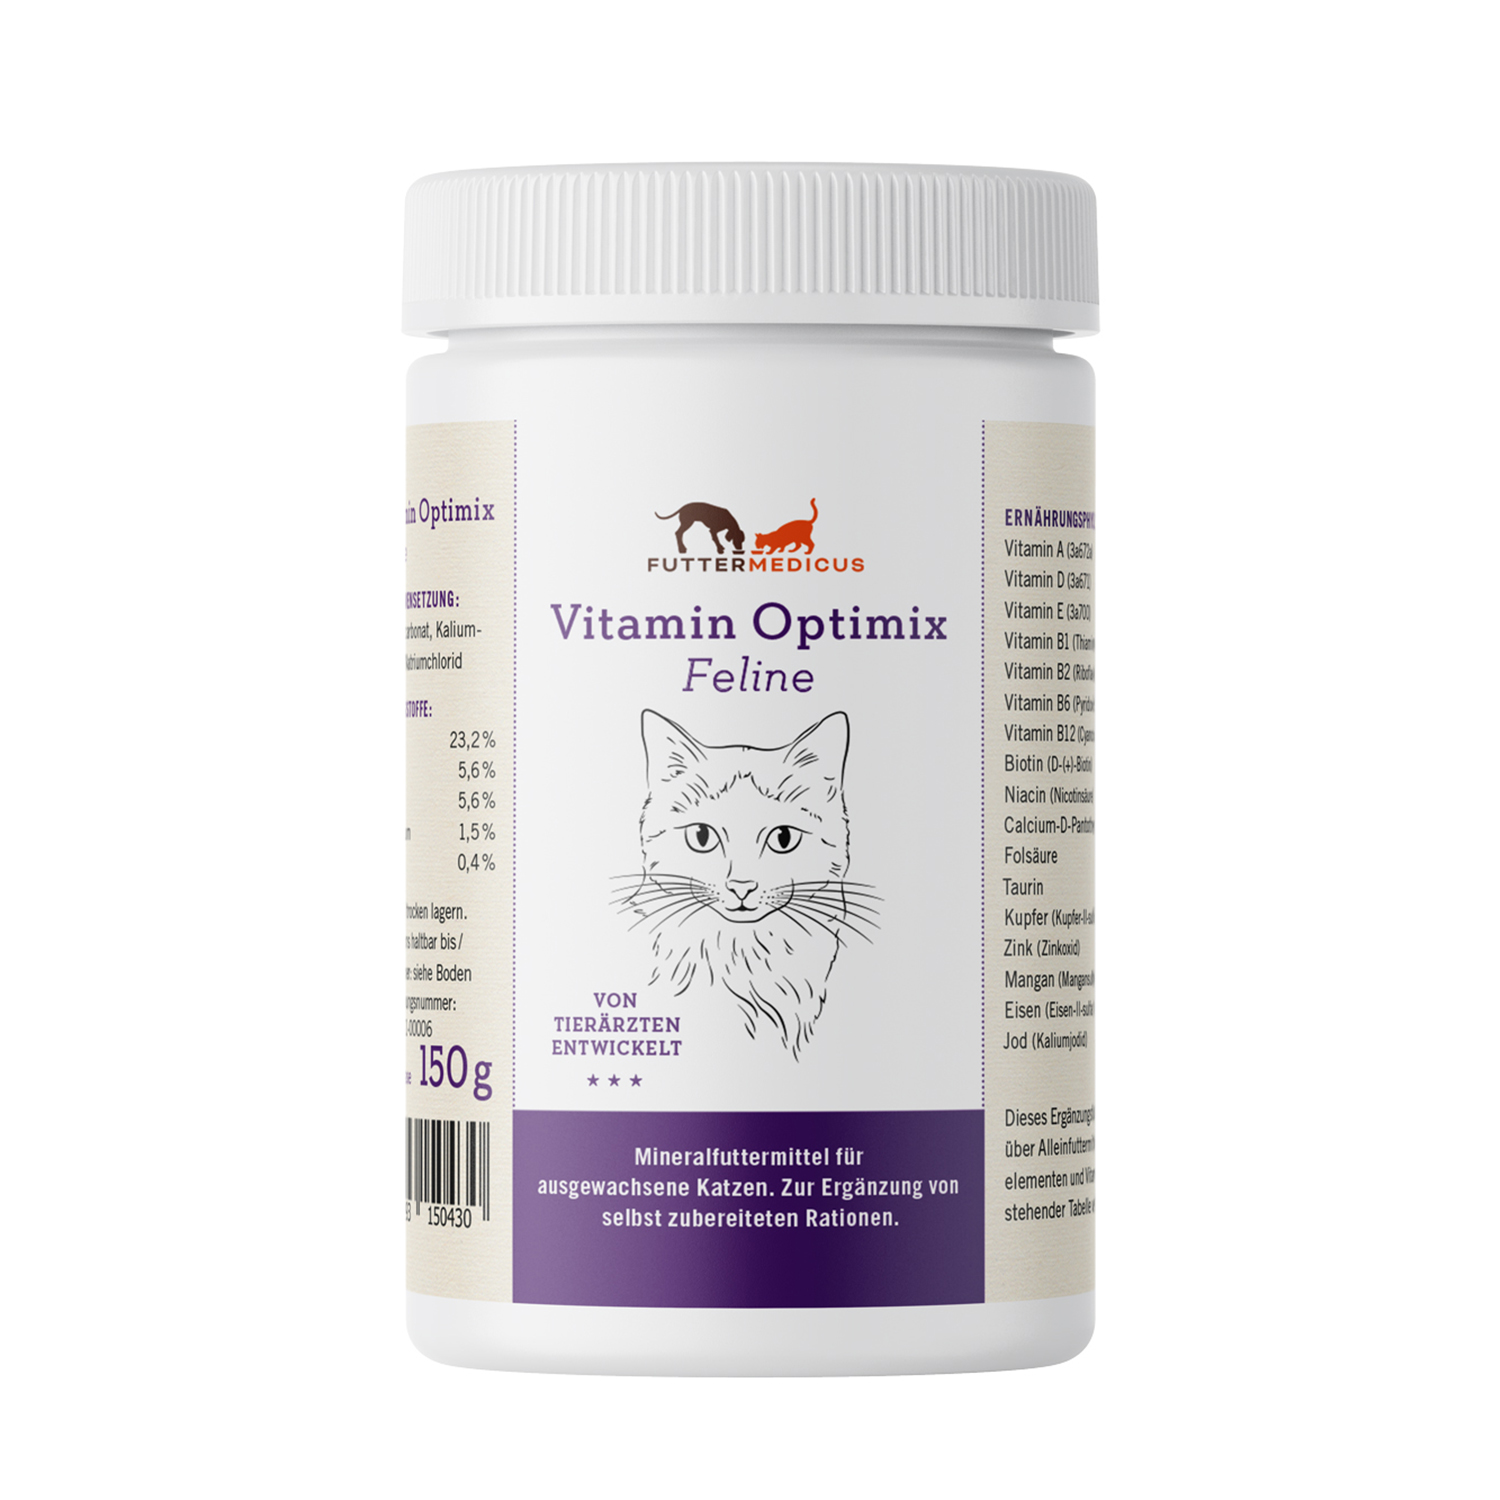 Vitamin Optimix Feline von Futtermedicus – 150g